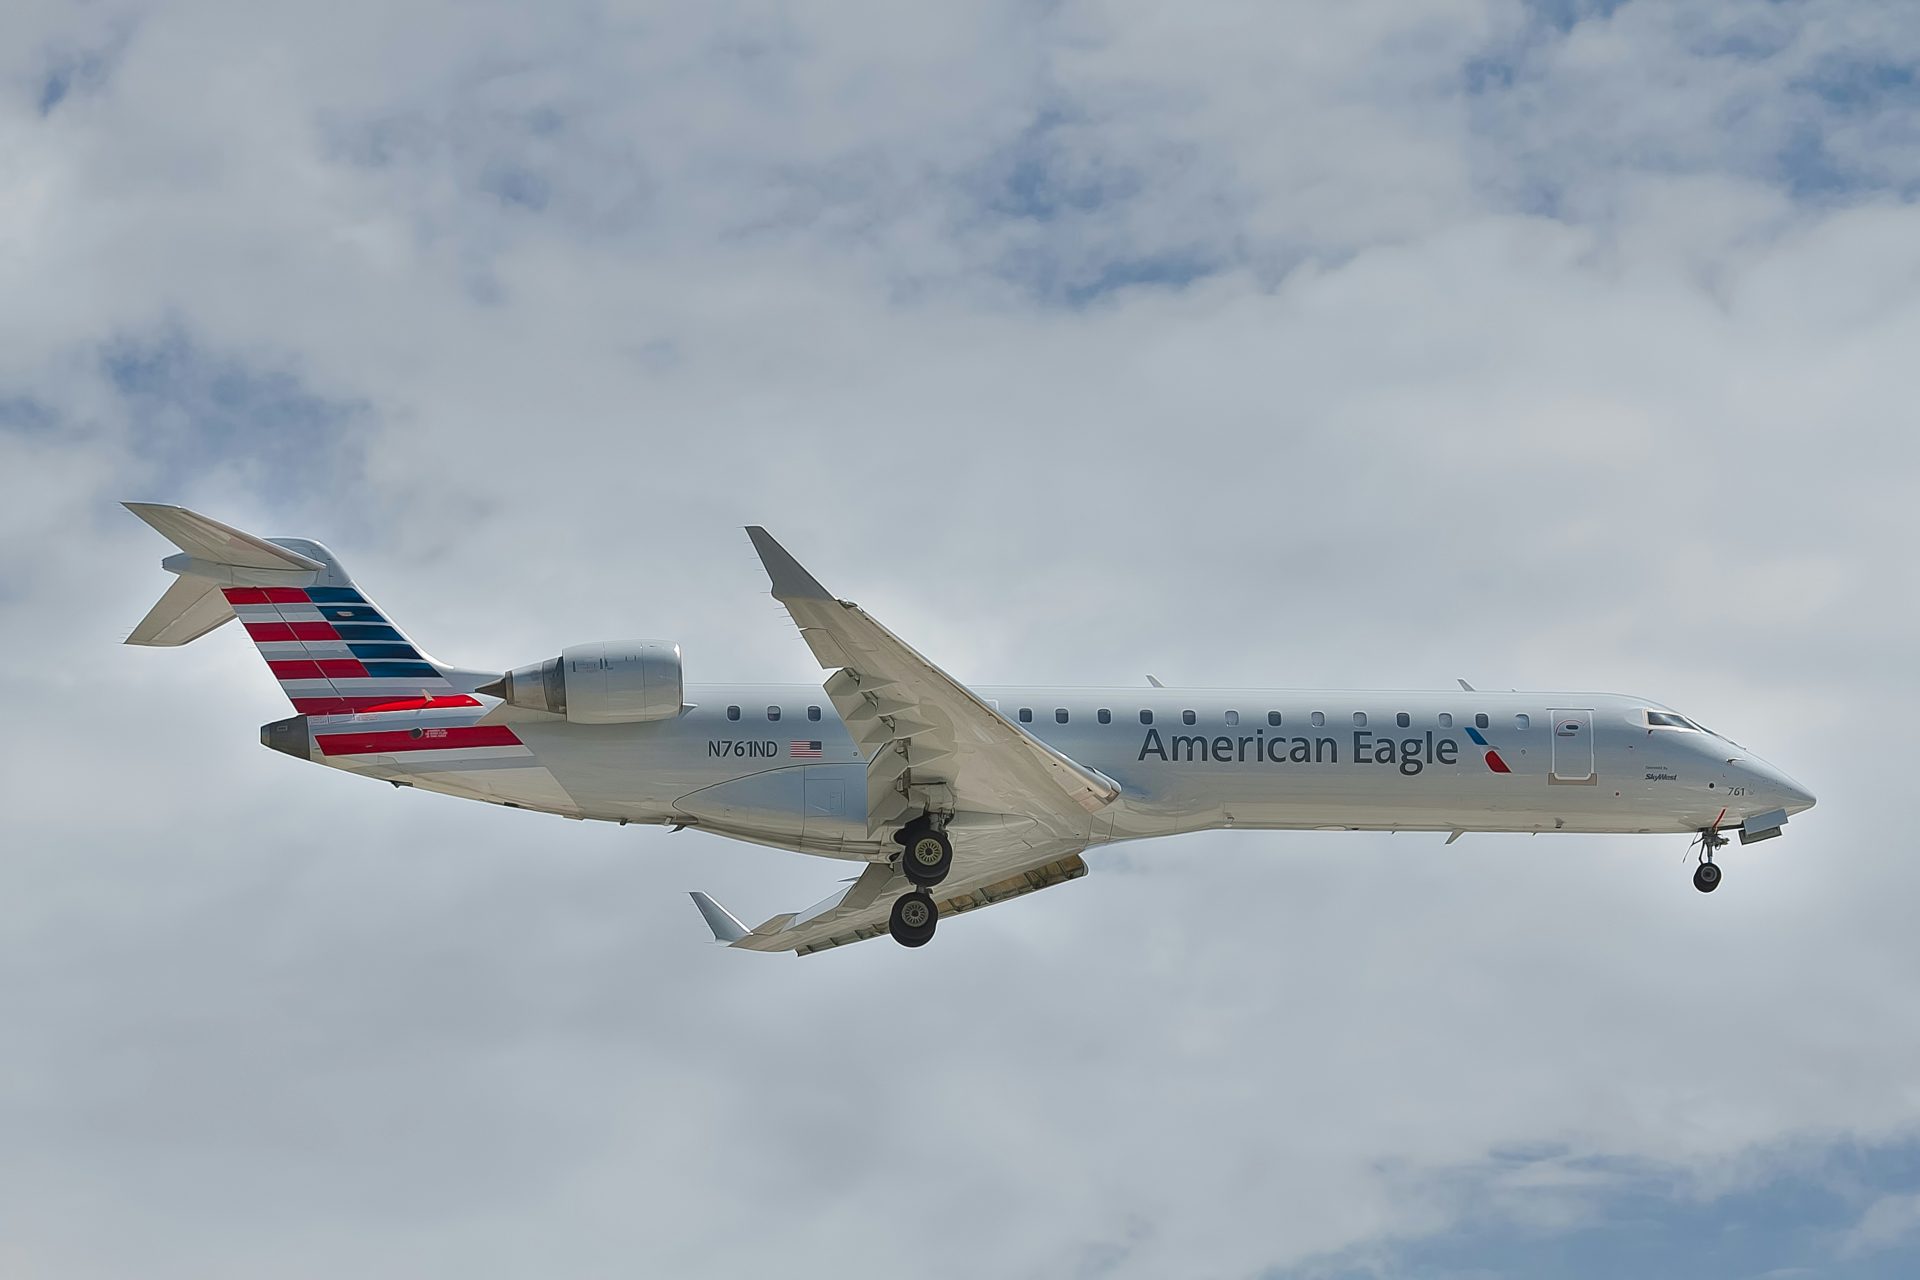 10. American Eagle (filial de American Airlines) 